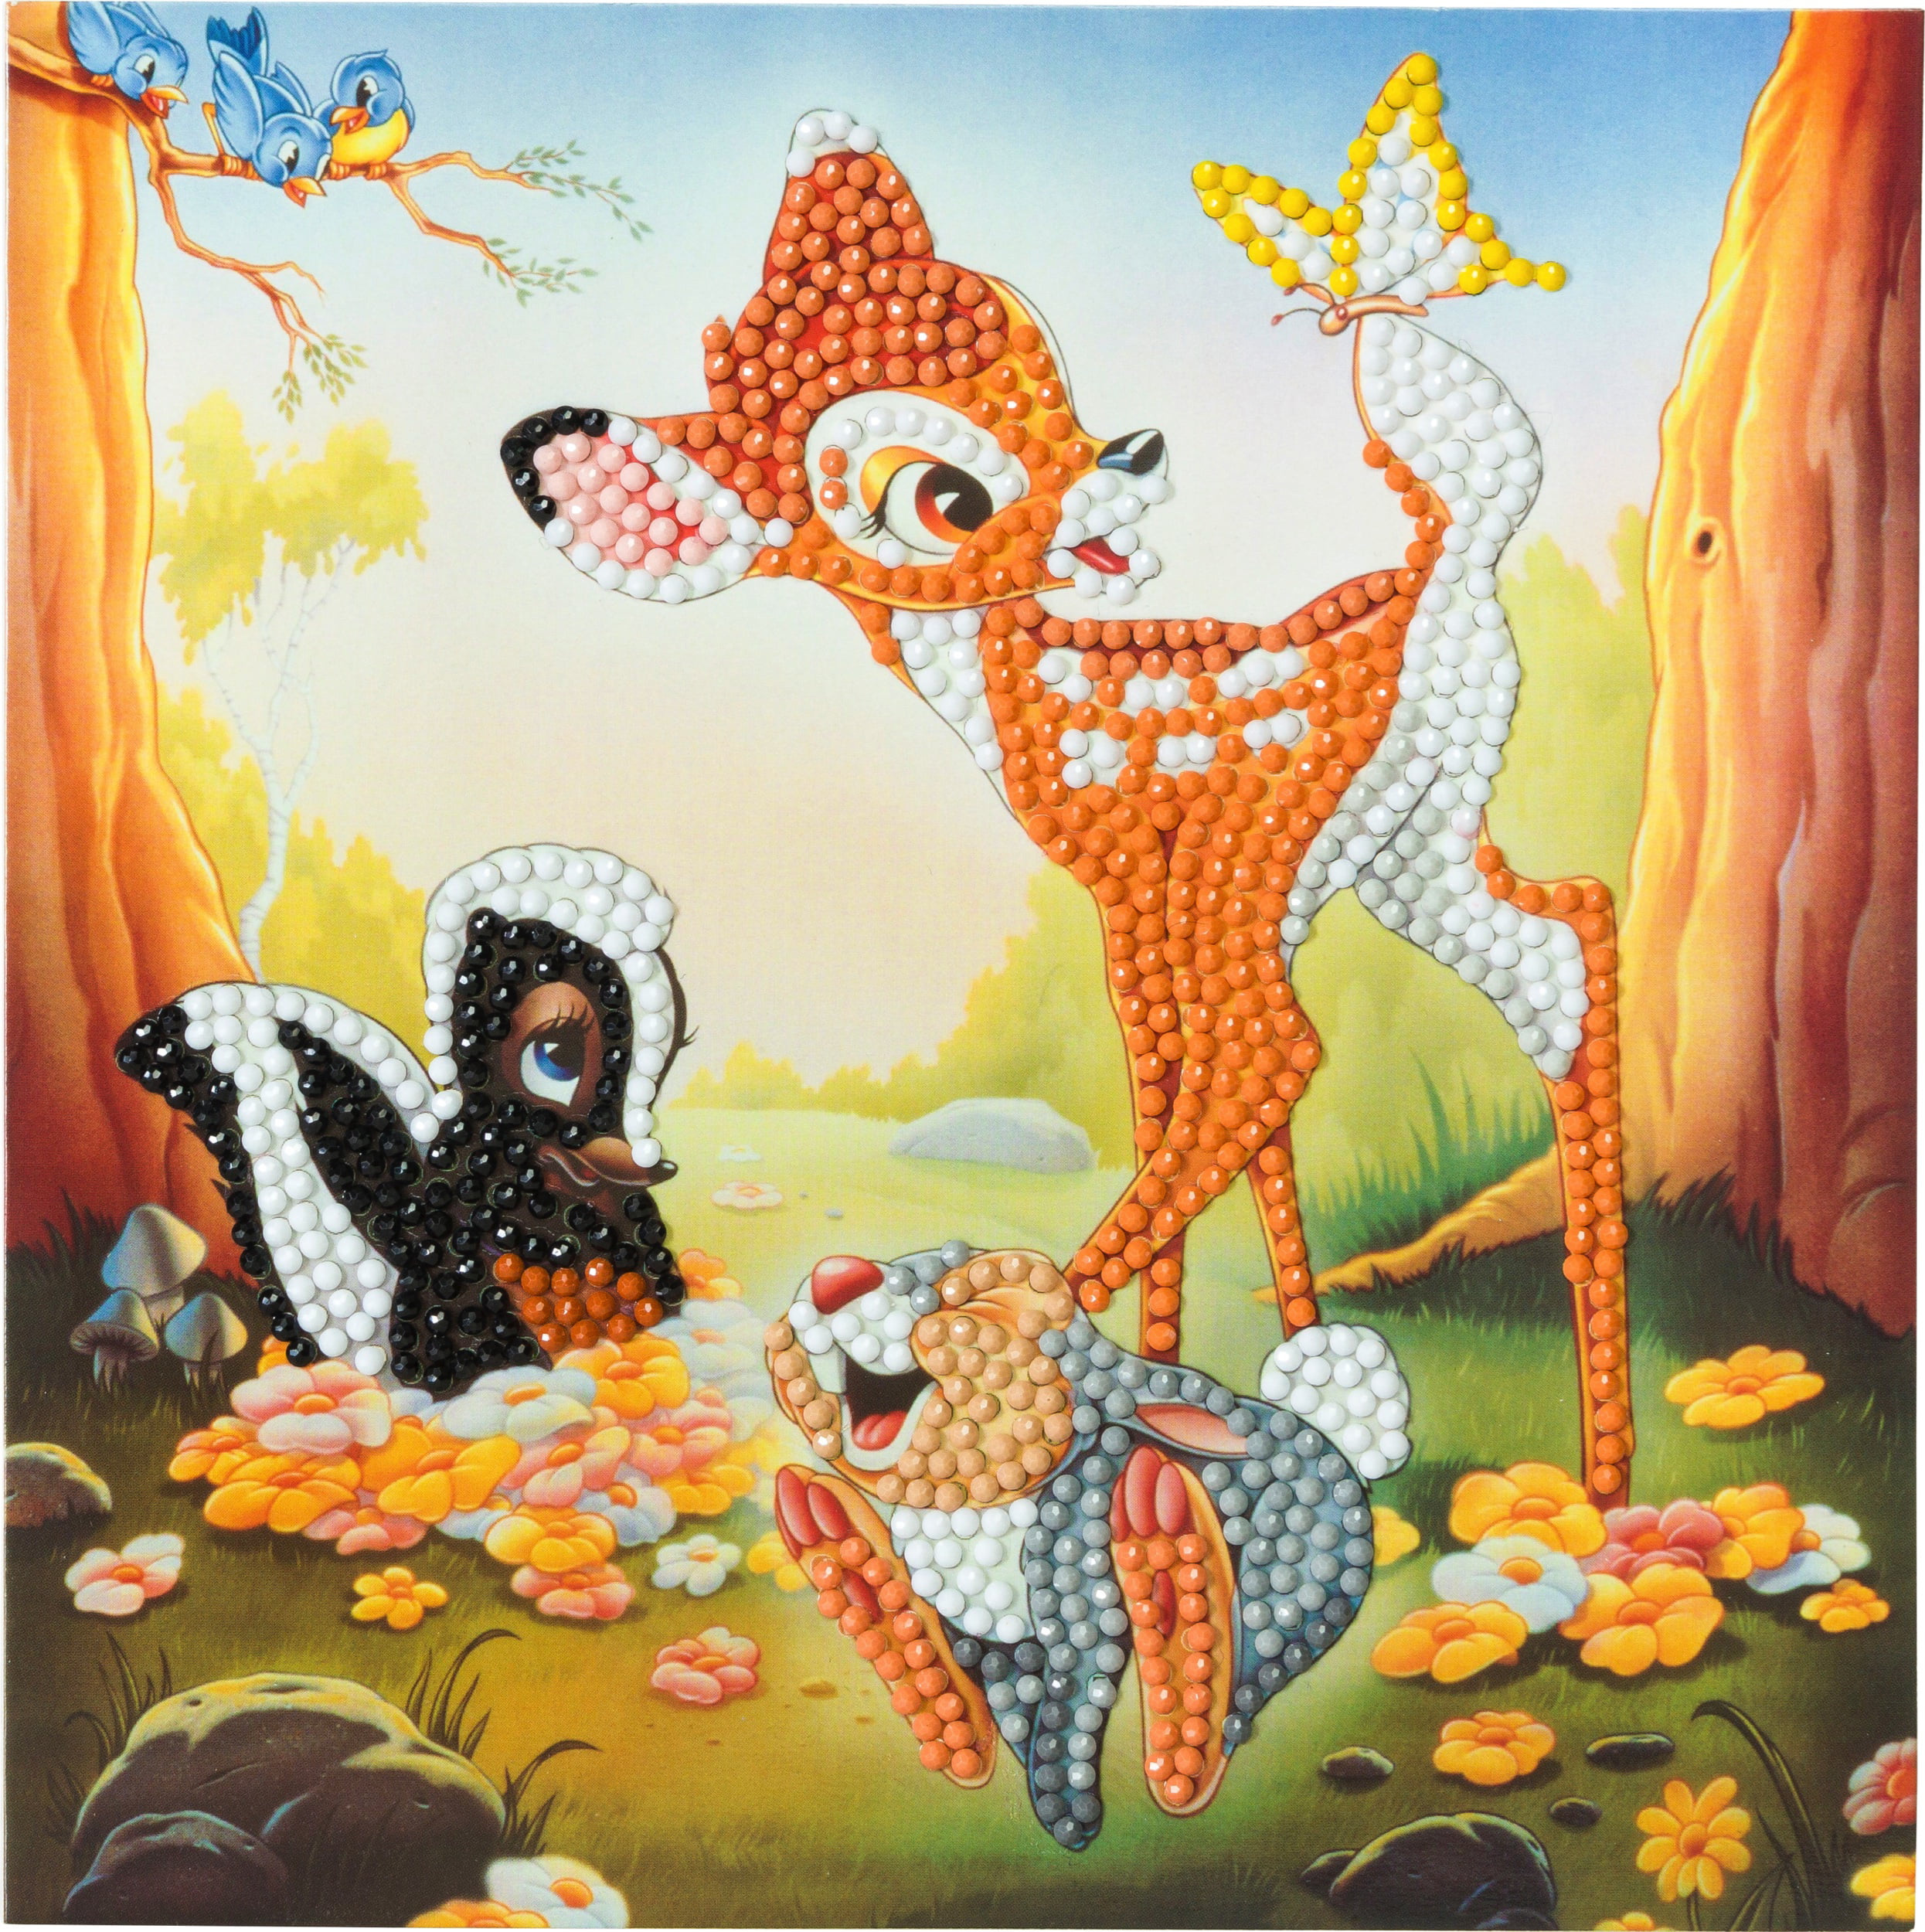  Karyees Little Mermaid Paint by Numbers Kits 16x20 Inch DIY 5D  Diamond Canvas Painting by Number Mermaid Full Drill Crystal Rhinestone  Diamond Embroidery Paintings Disney Princess Ariel